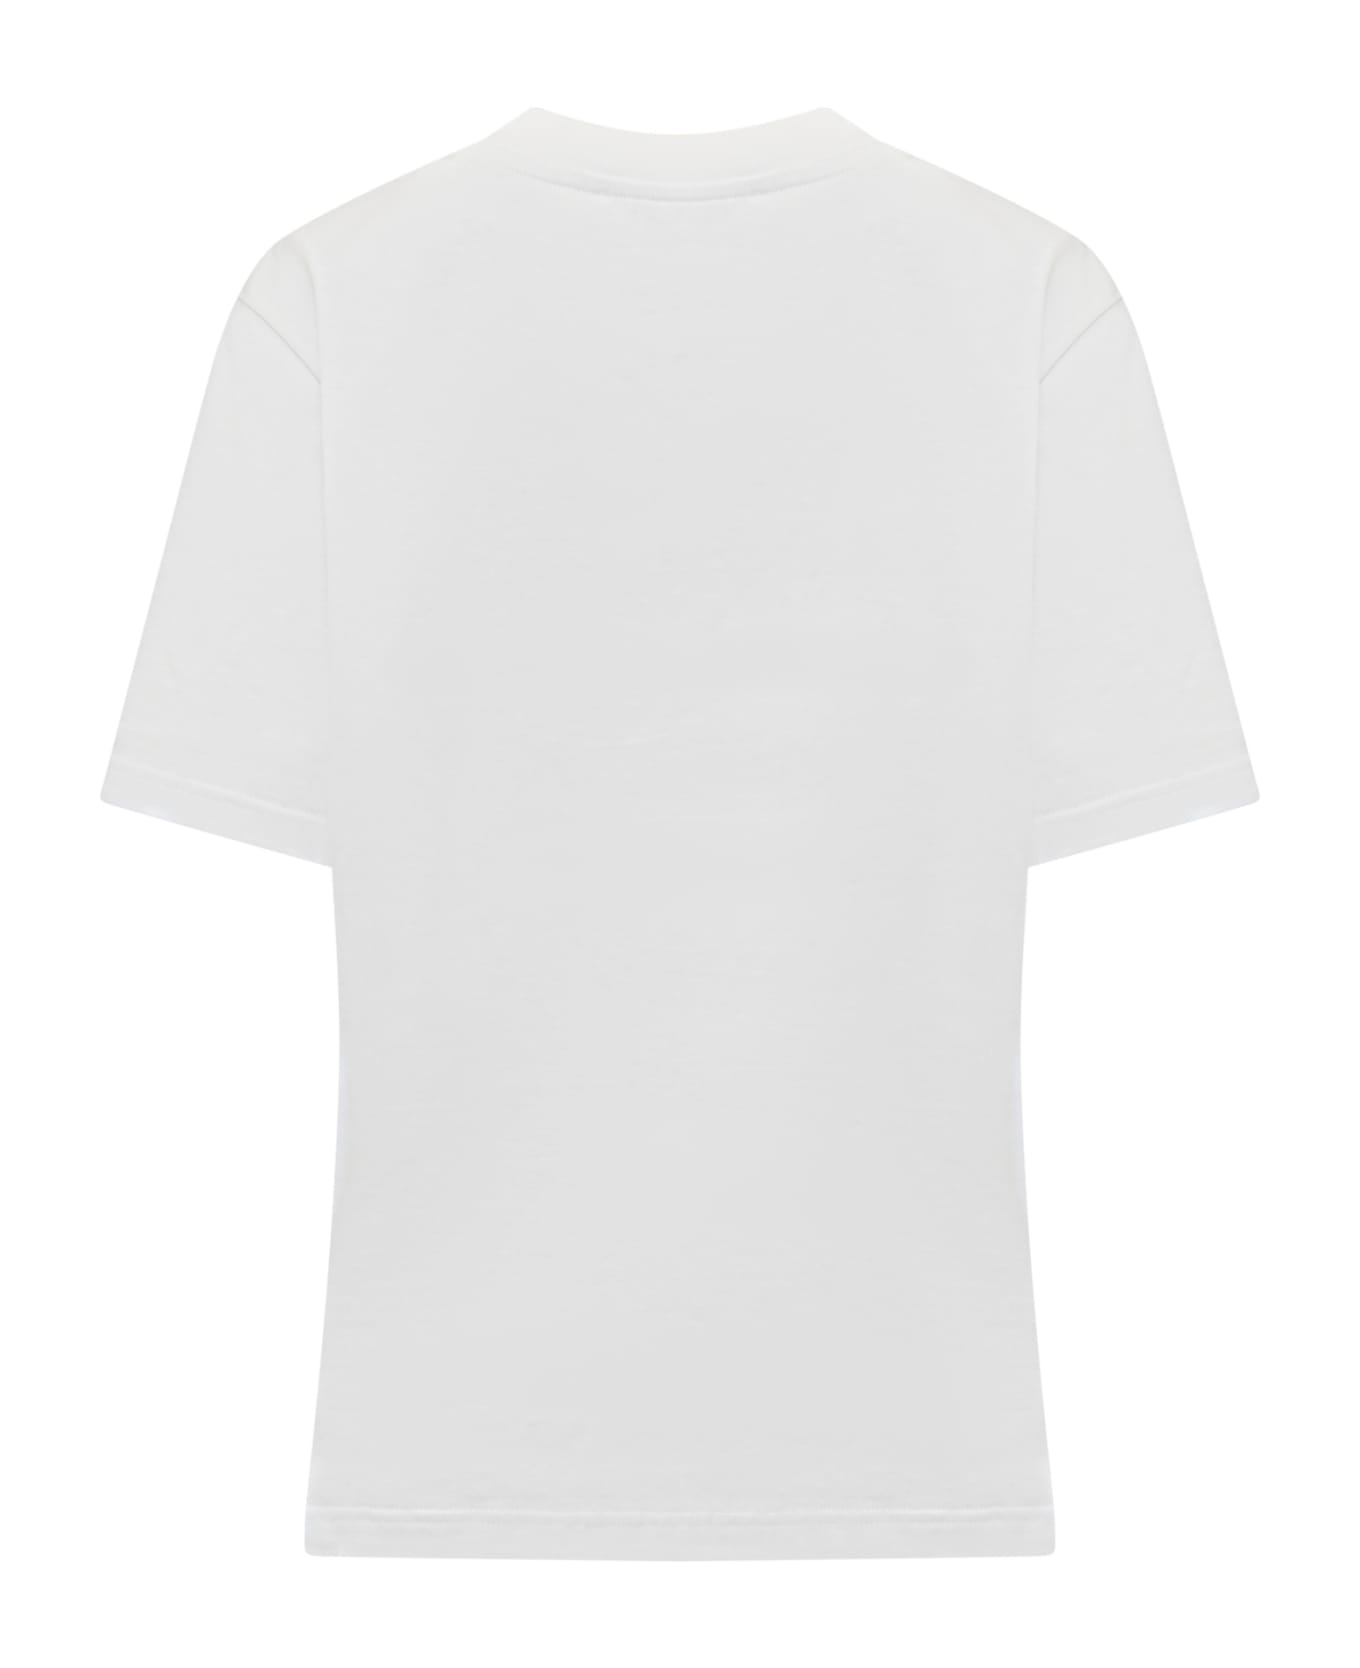 Casablanca Tennis Club T-shirt シャツ